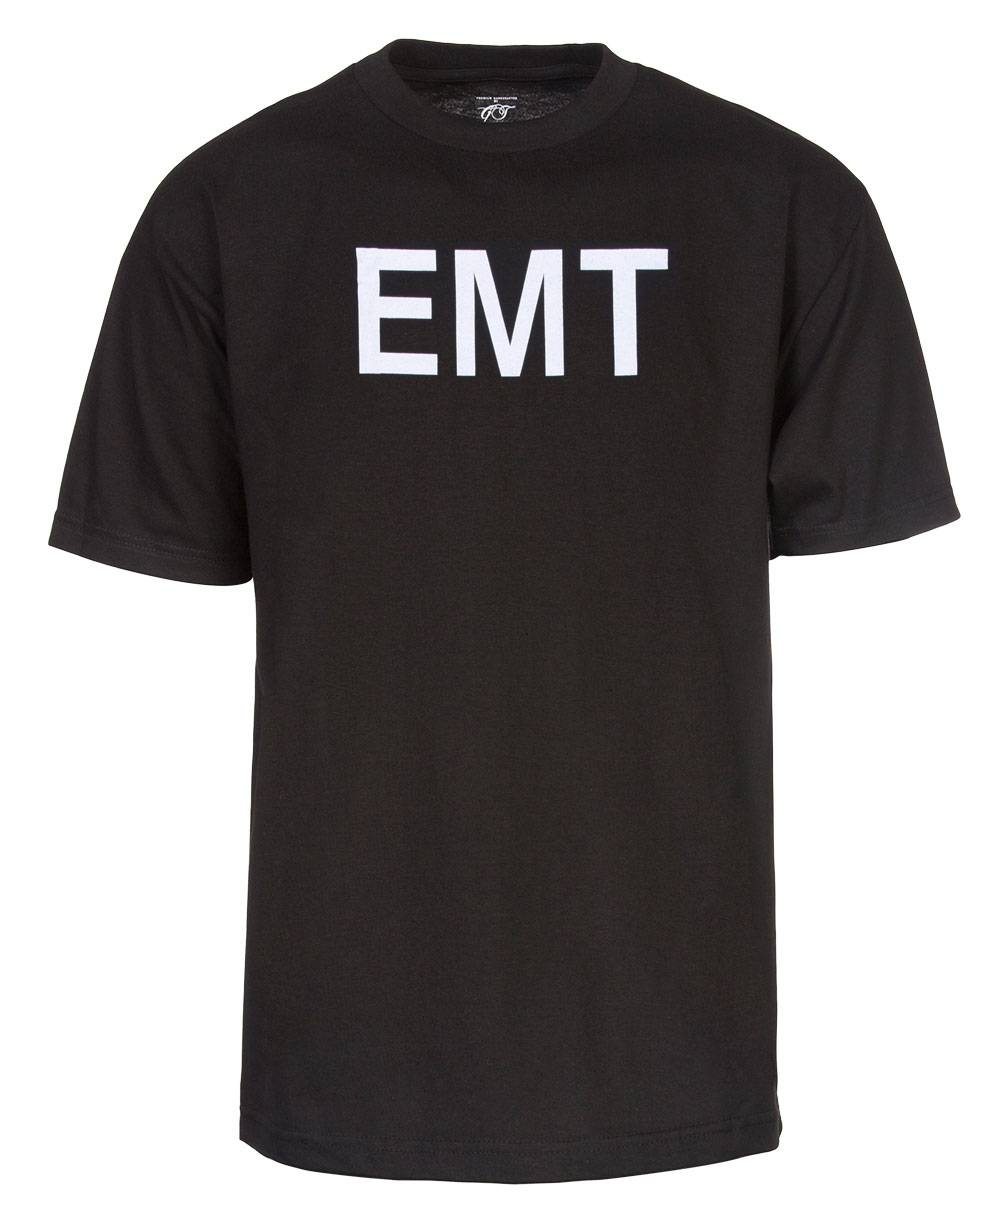 Gravity Trading EMT Emergency Medical Technicians Law Enforcement T-Shirt